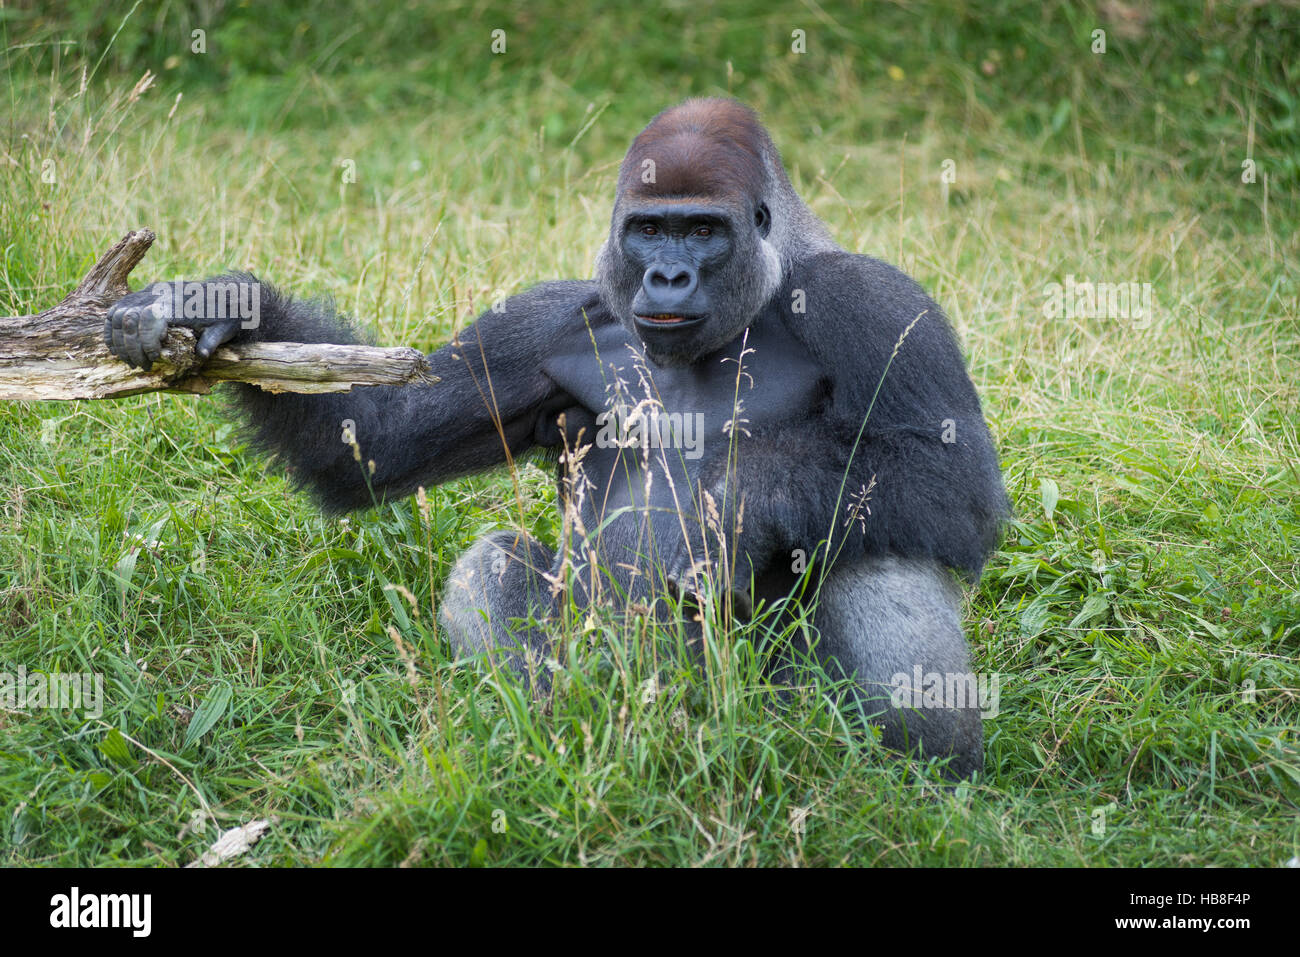 Maschio (gorilla Gorilla) seduto in erba, Zoo Givskud, dare, nello Jutland, Danimarca Meridionale, Danimarca Foto Stock